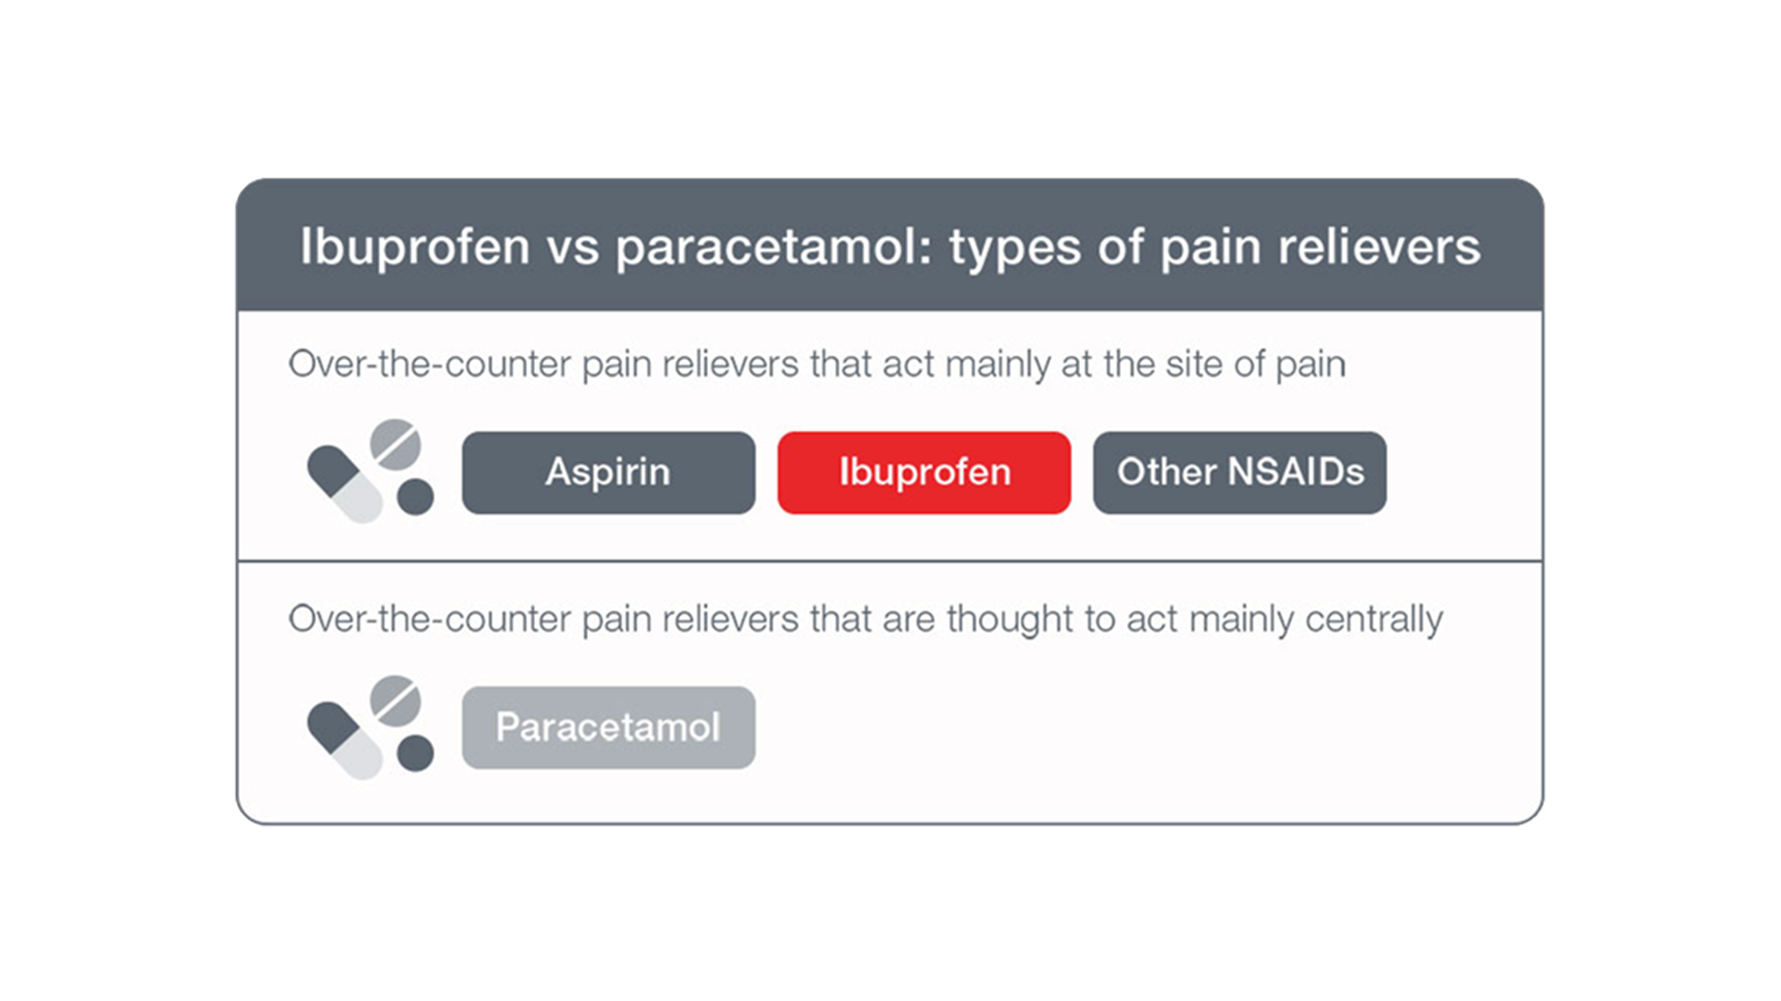 This image explains the different between ibuprofen vs paracetamol